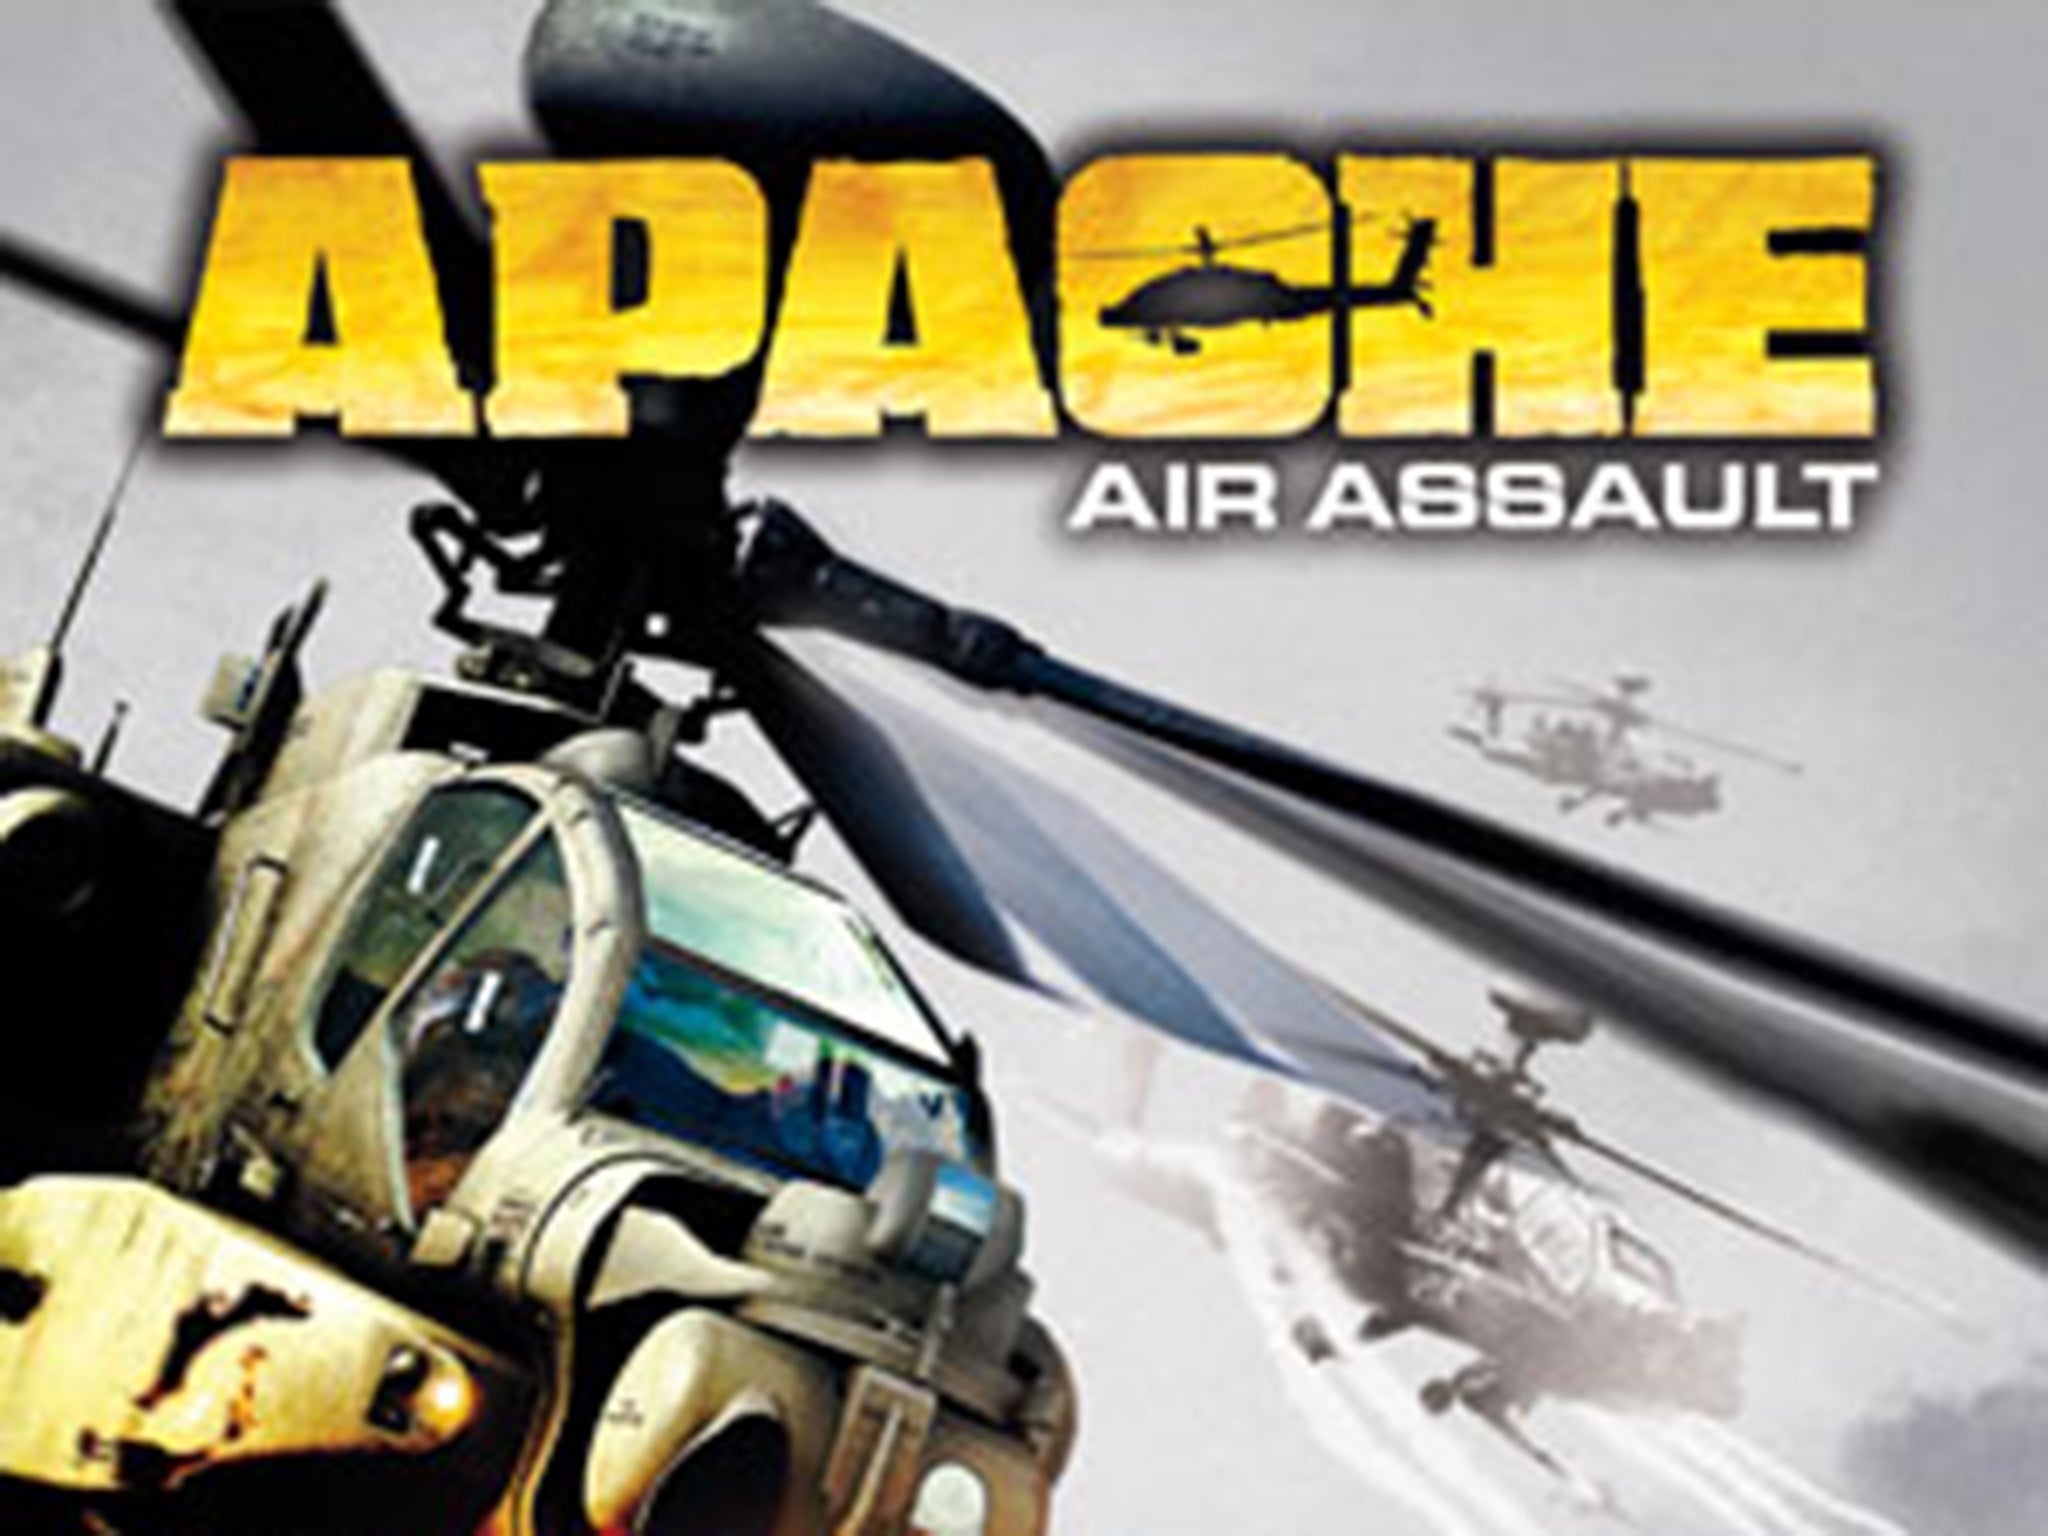 Apache air assault on steam фото 19